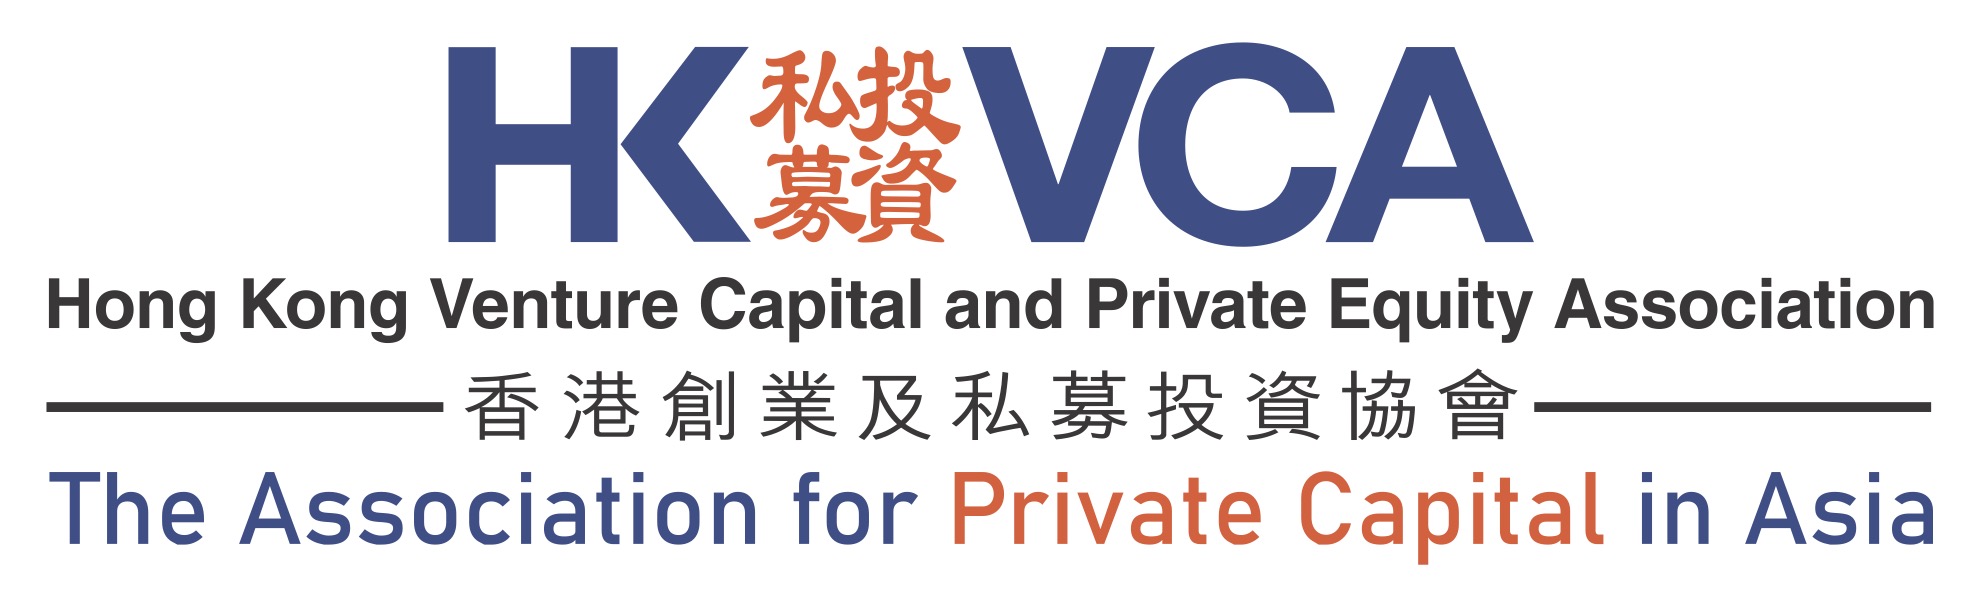 HKVCA New Logo 2020 v2